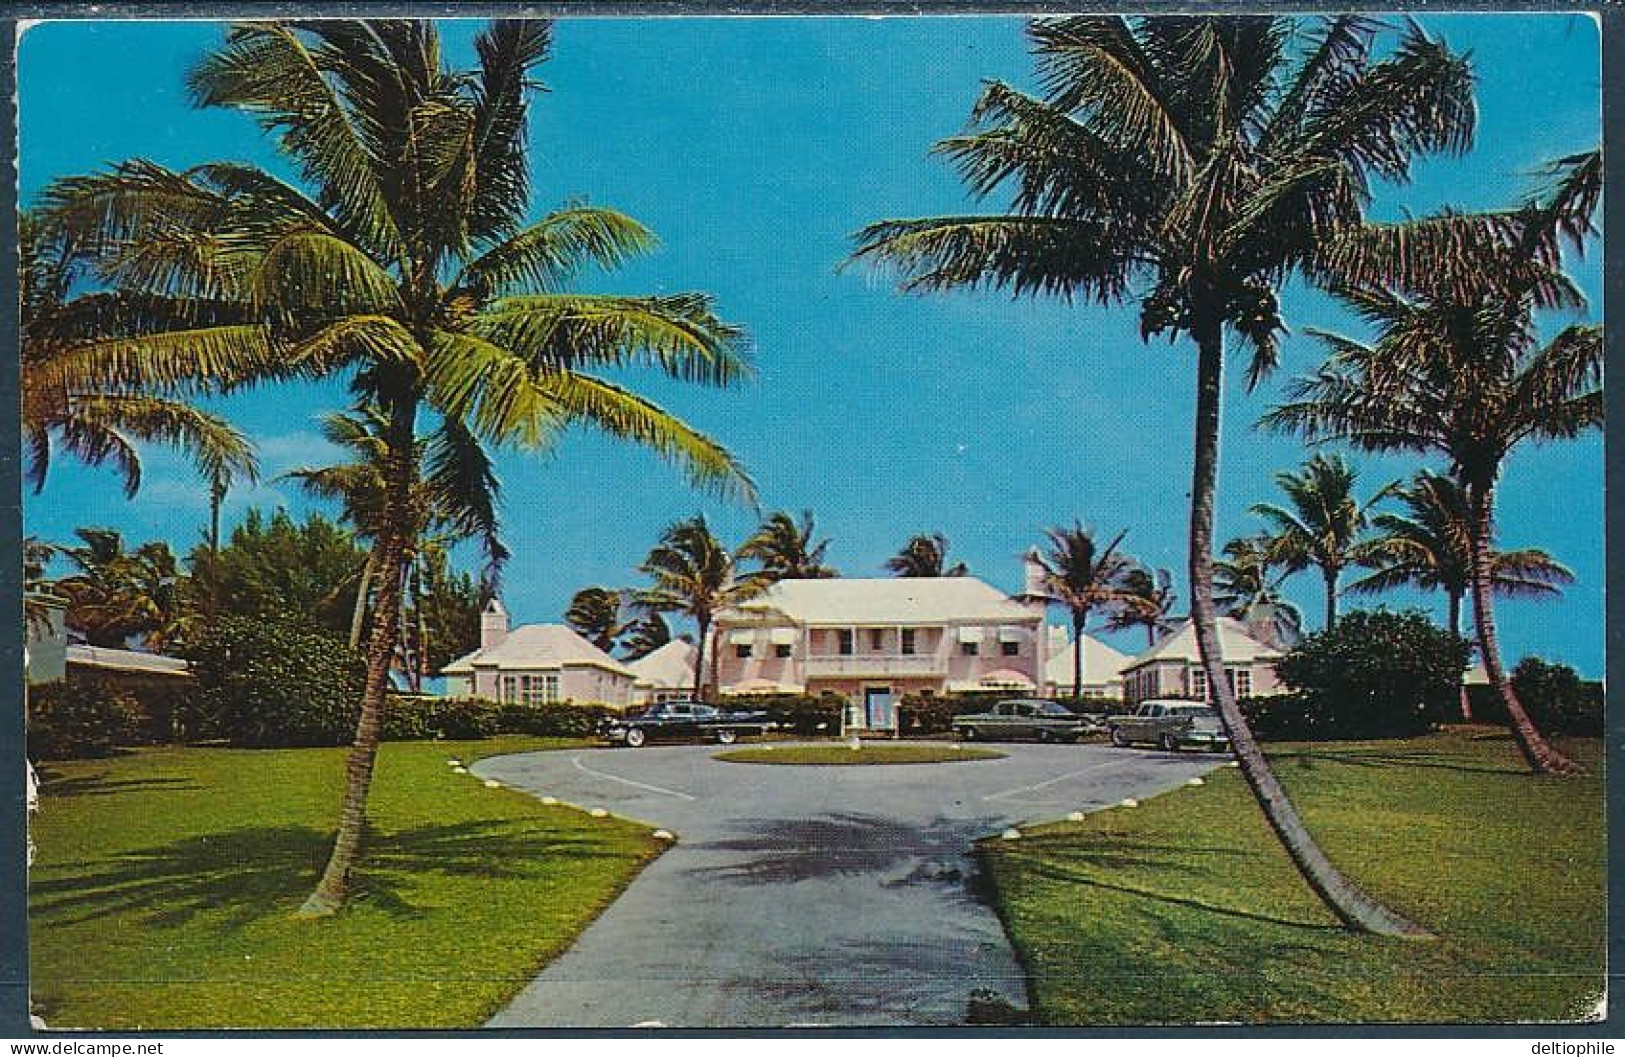 Holiday House, 2575 South Ocean Blvd., Delray Beach, Florida - Posted 1959 - Miami